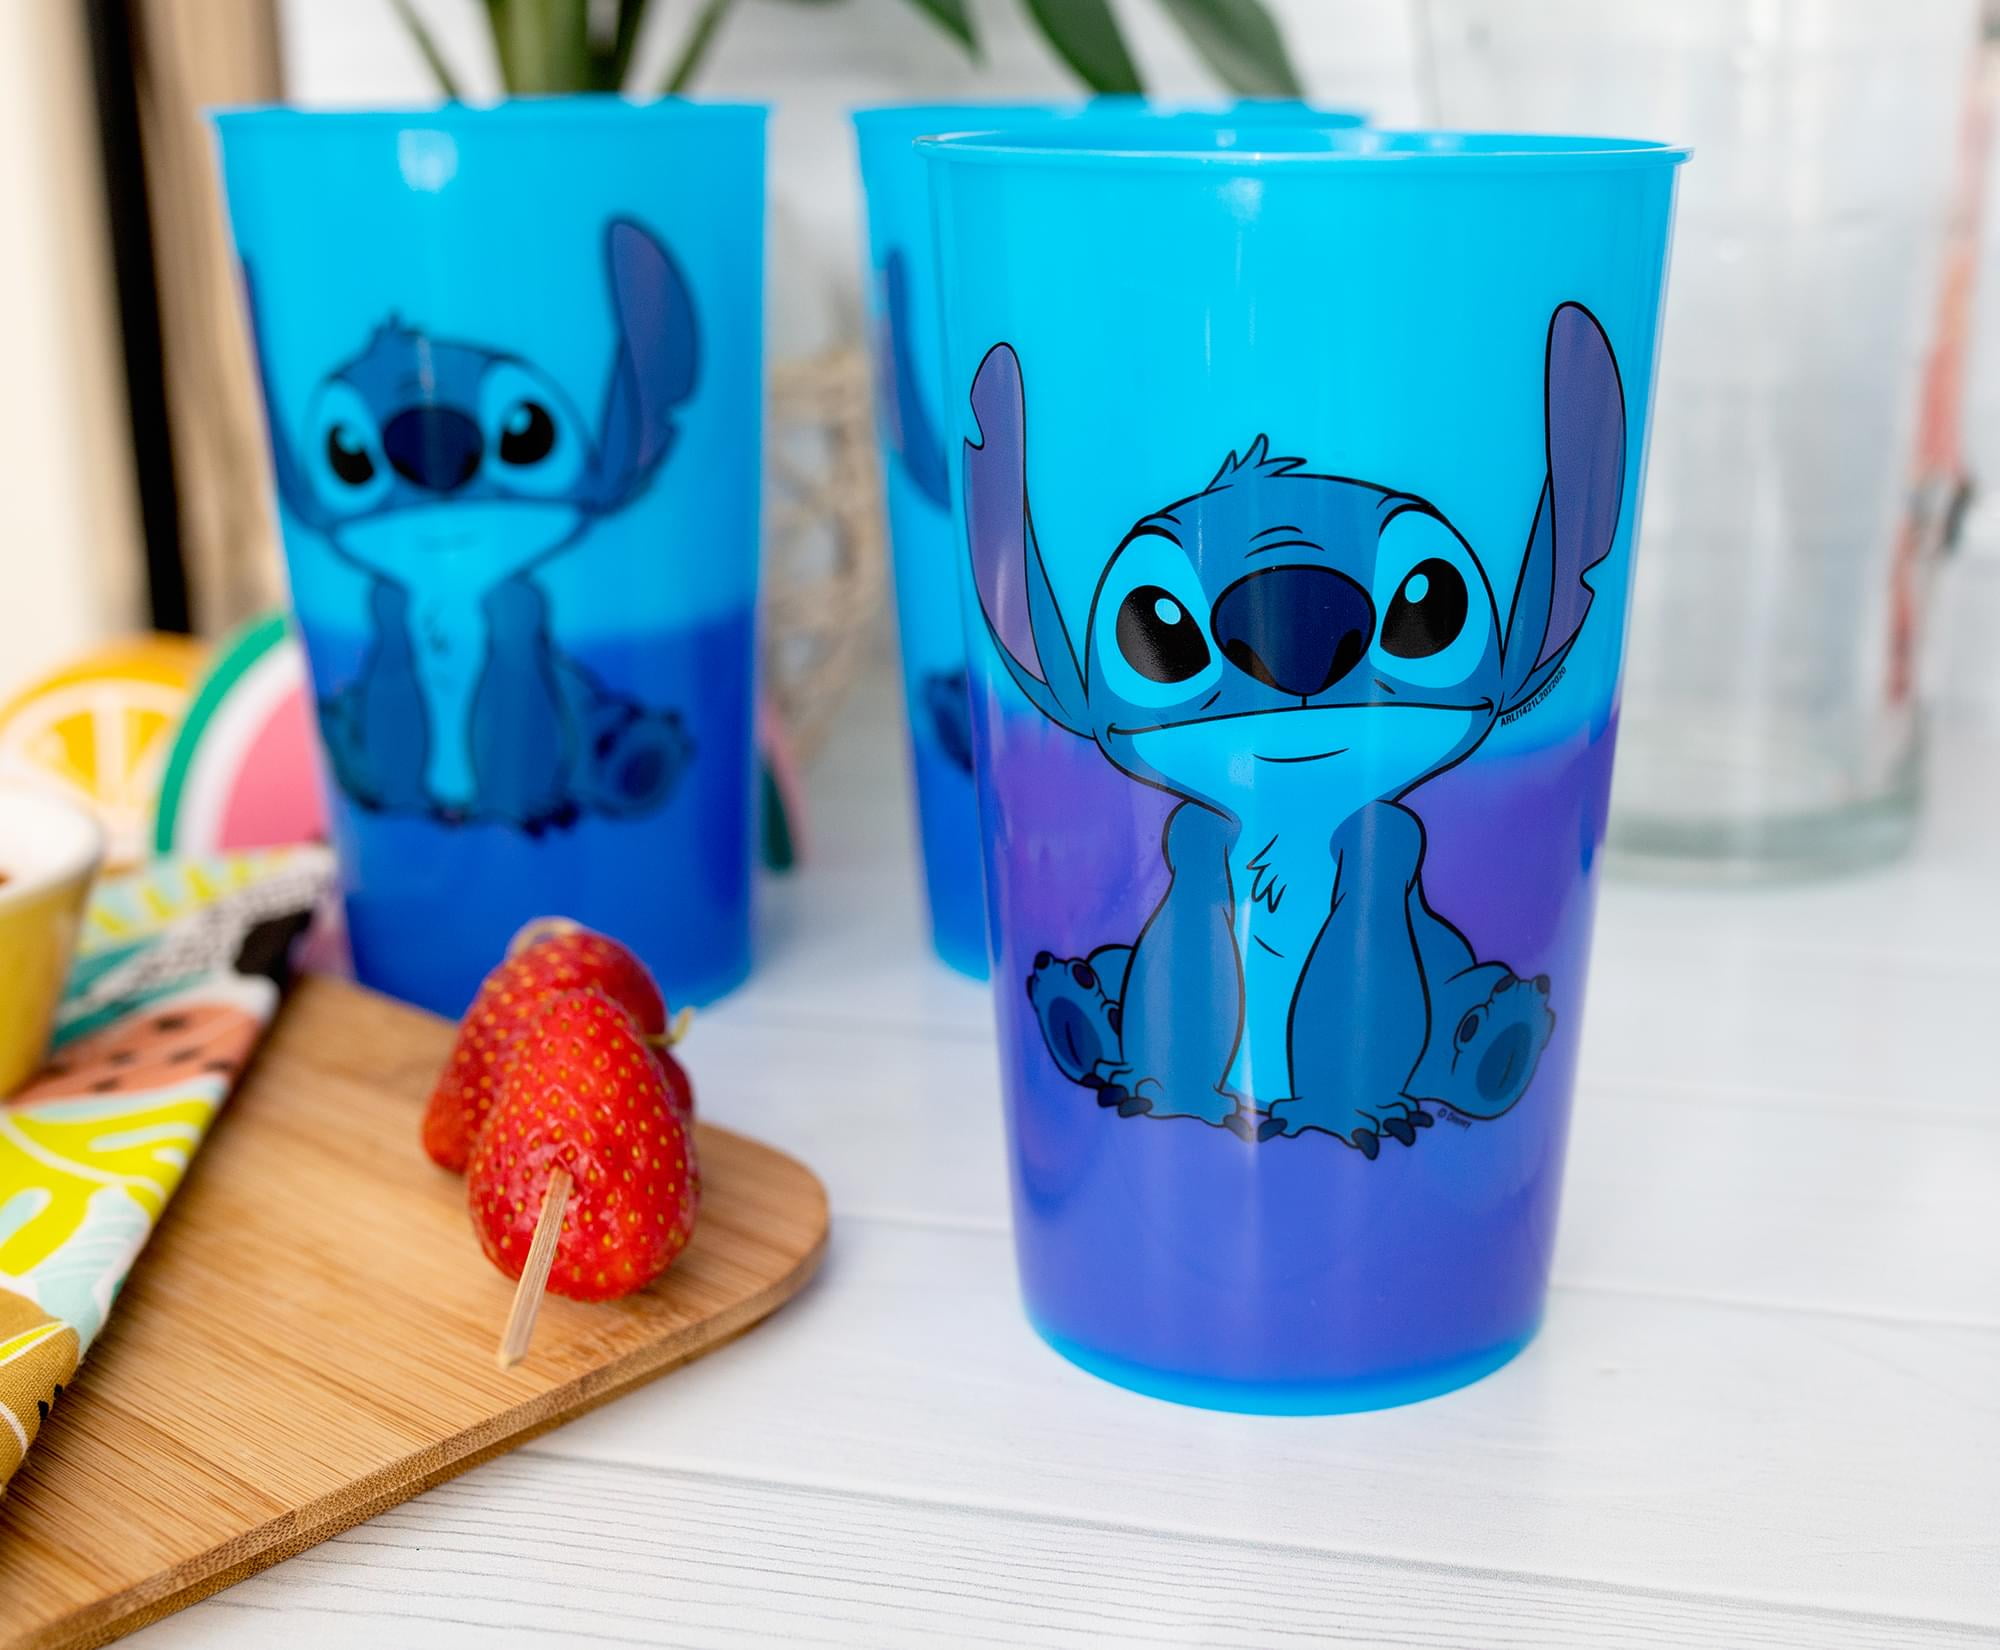 Silver Buffalo Disney Lilo & Stitch Tropical 2-ounce Plastic Mini Cups